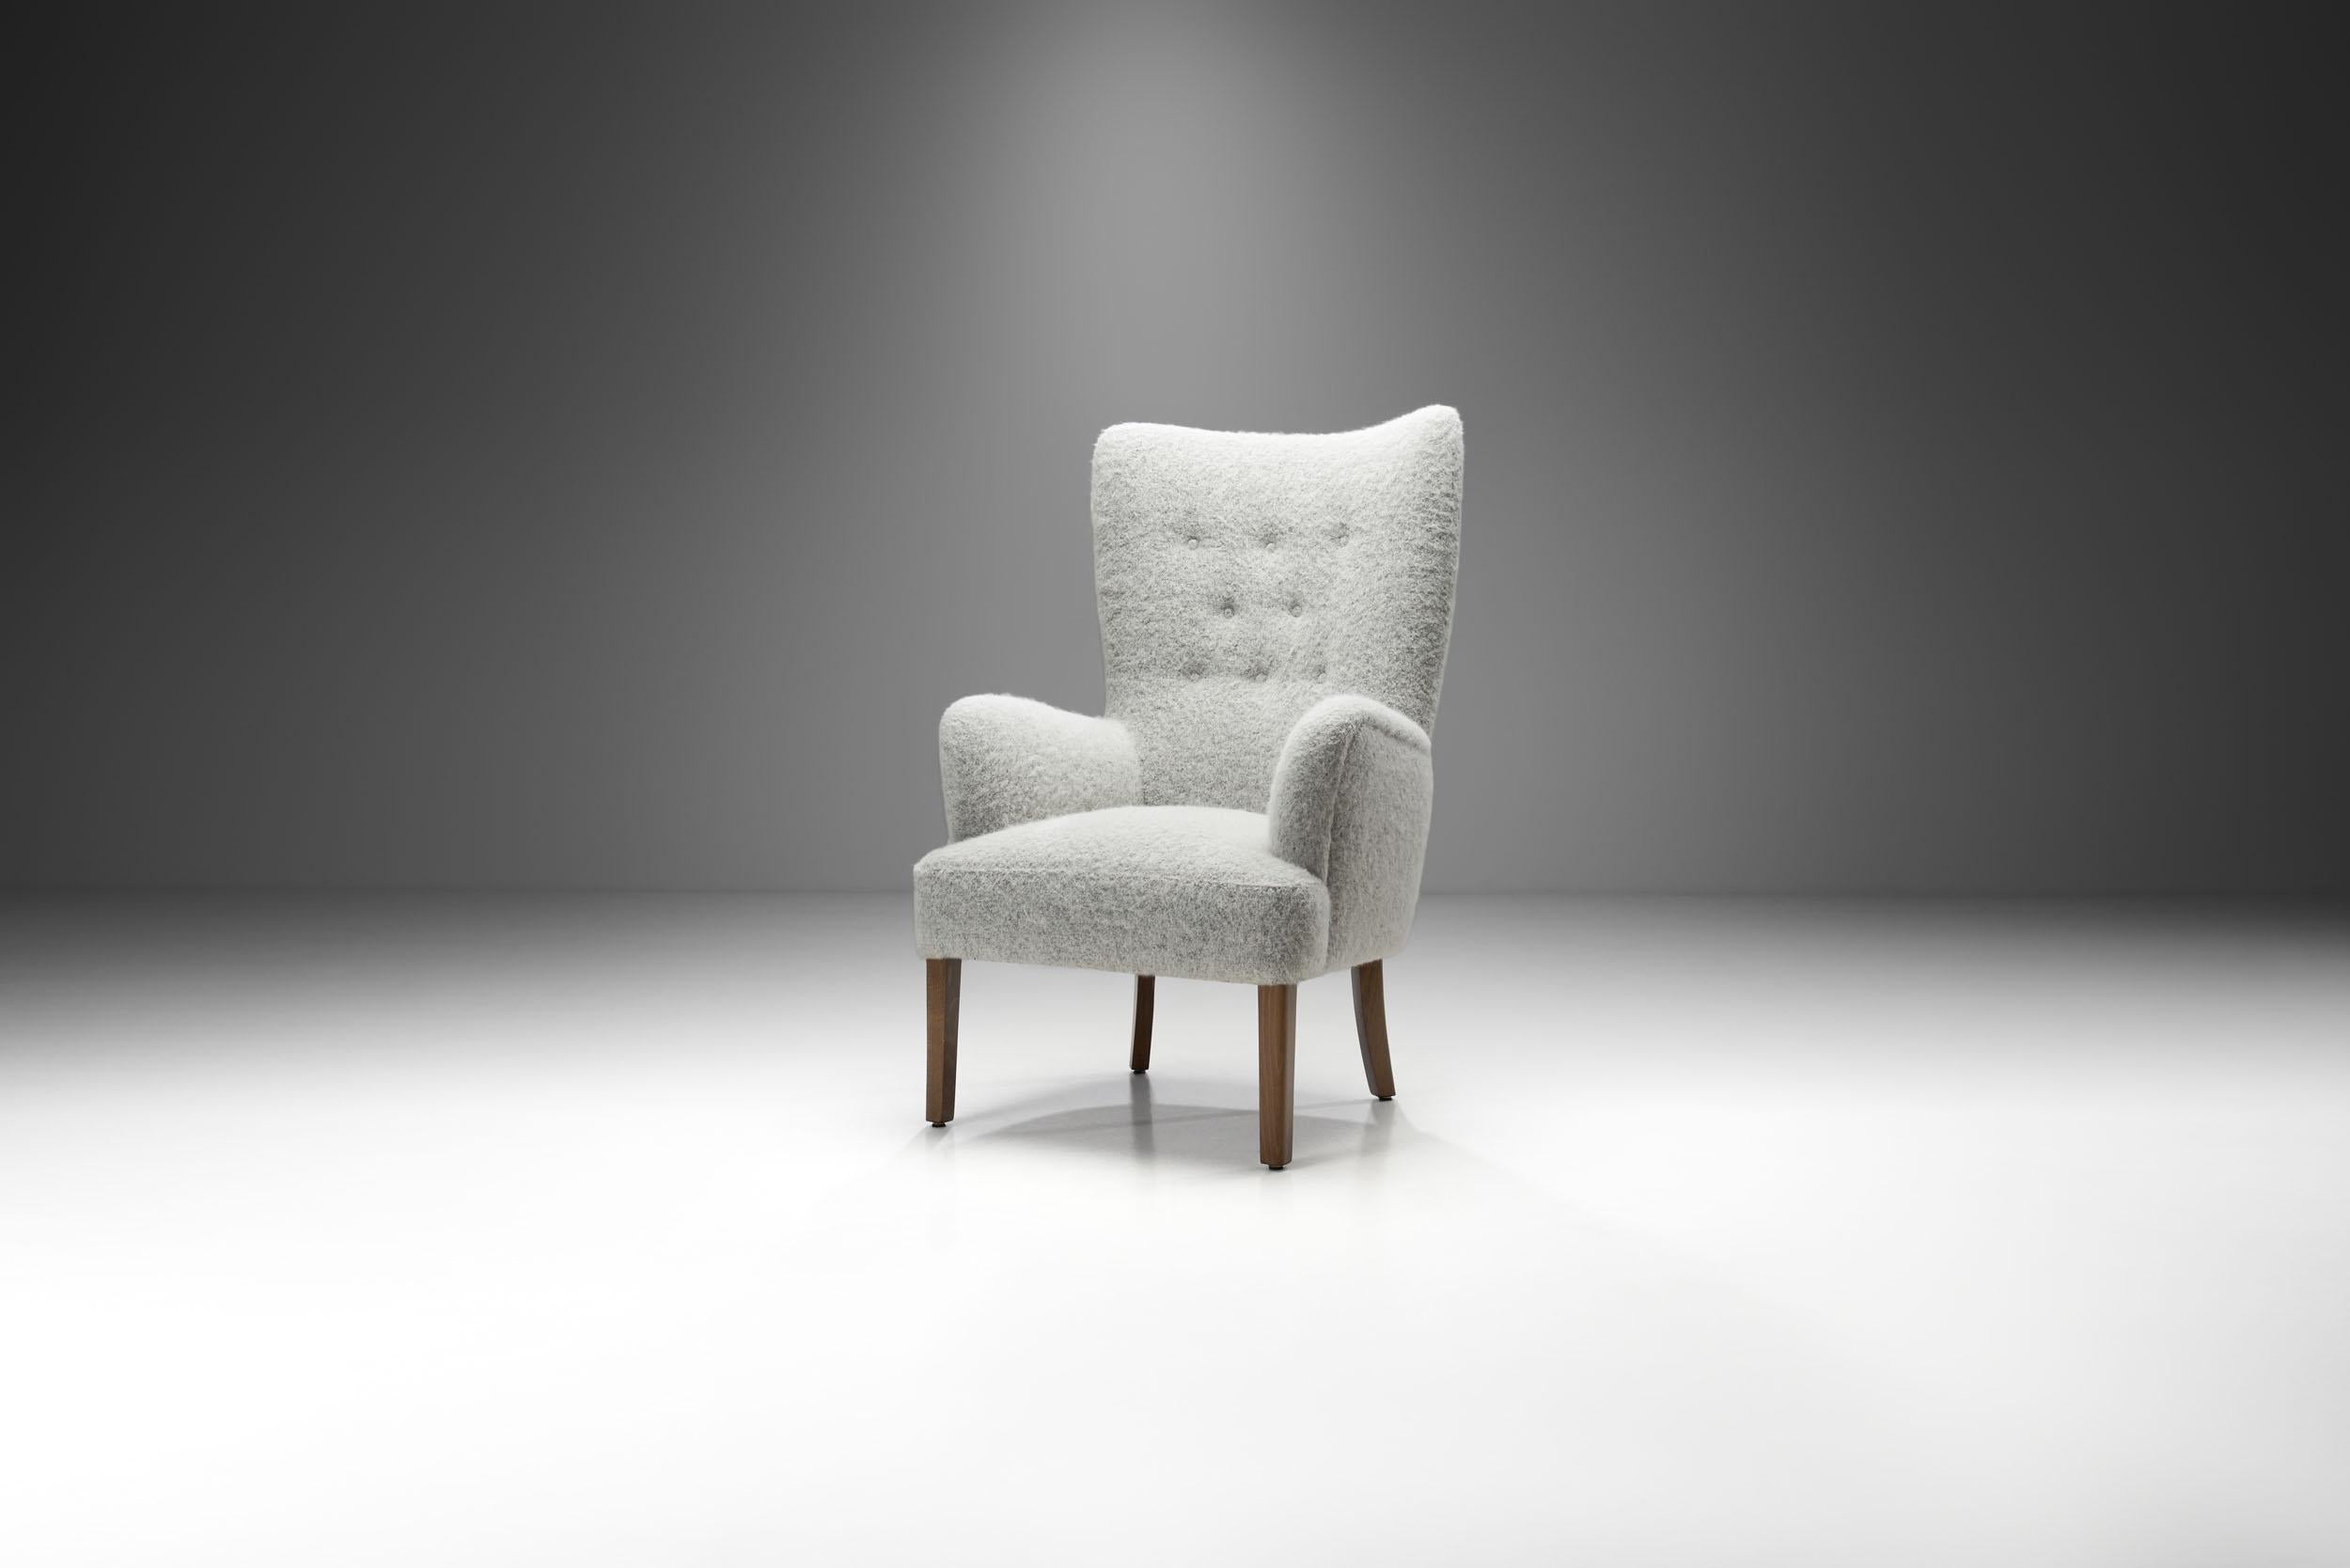 Fabric Ole Wanscher “Model 1673” High Back Chairs for Fritz Hansen, Denmark 1940s For Sale